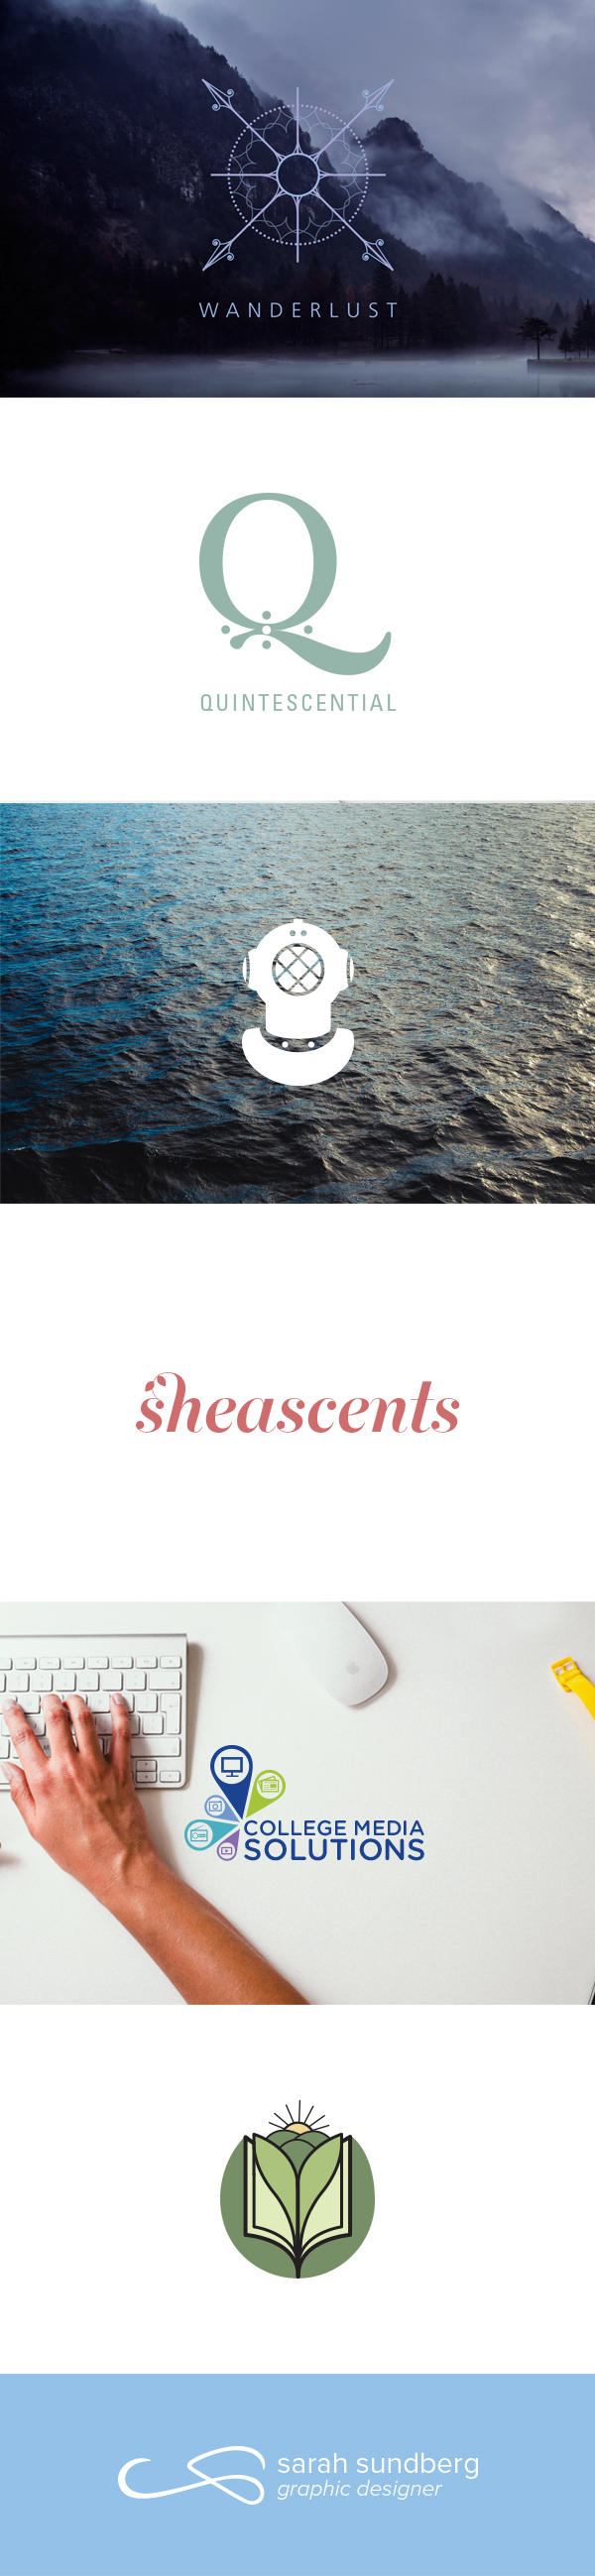 wanderlust logo design Travel sheascents perfume brand scuba water Ocean explore simple